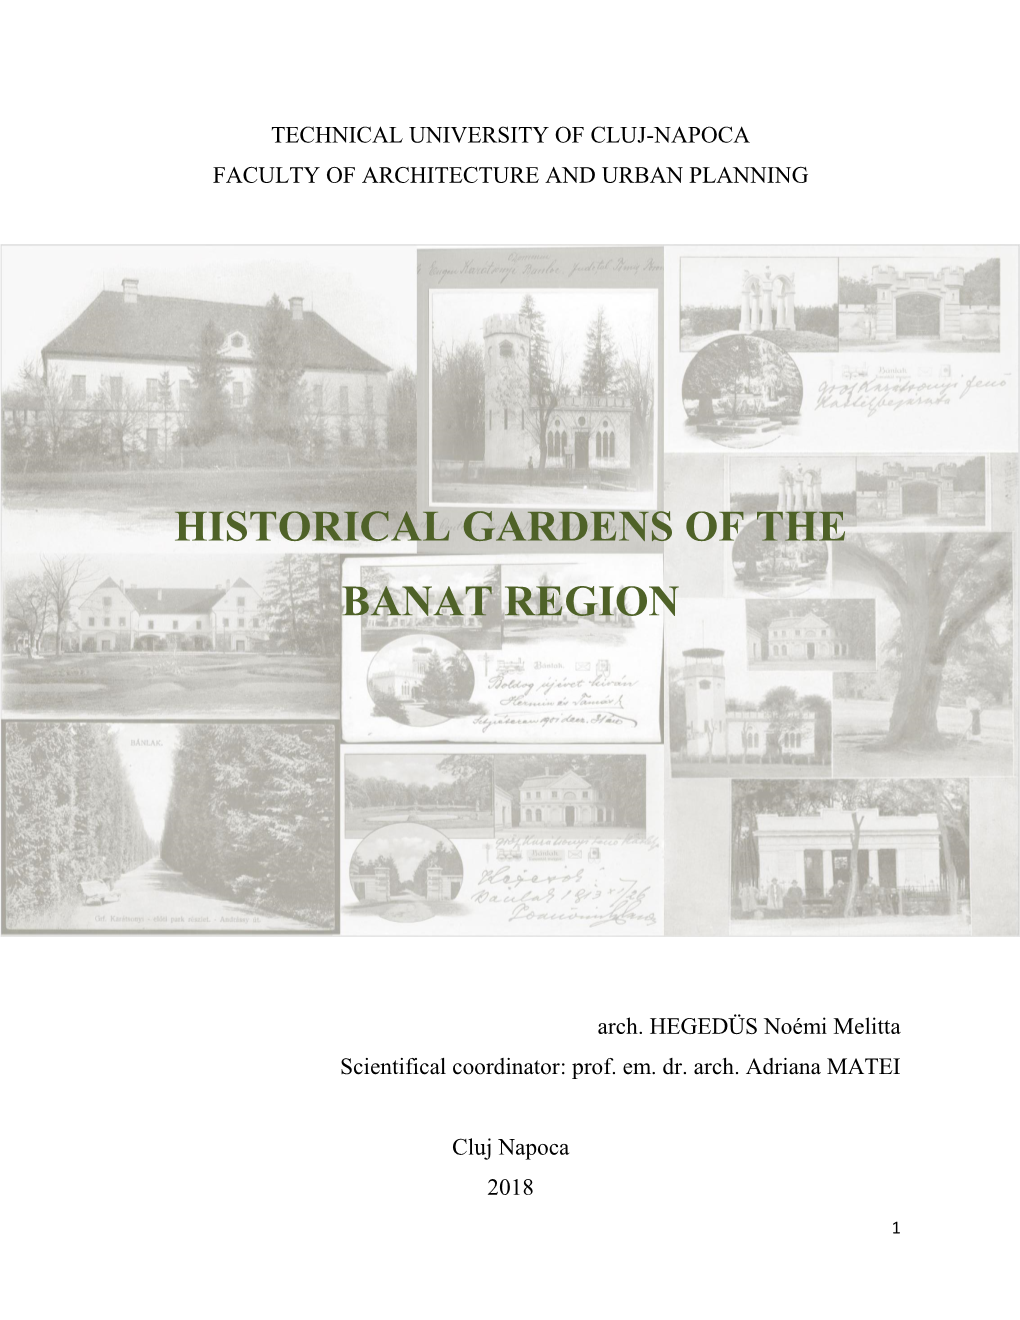 Historical Gardens of the Banat Region